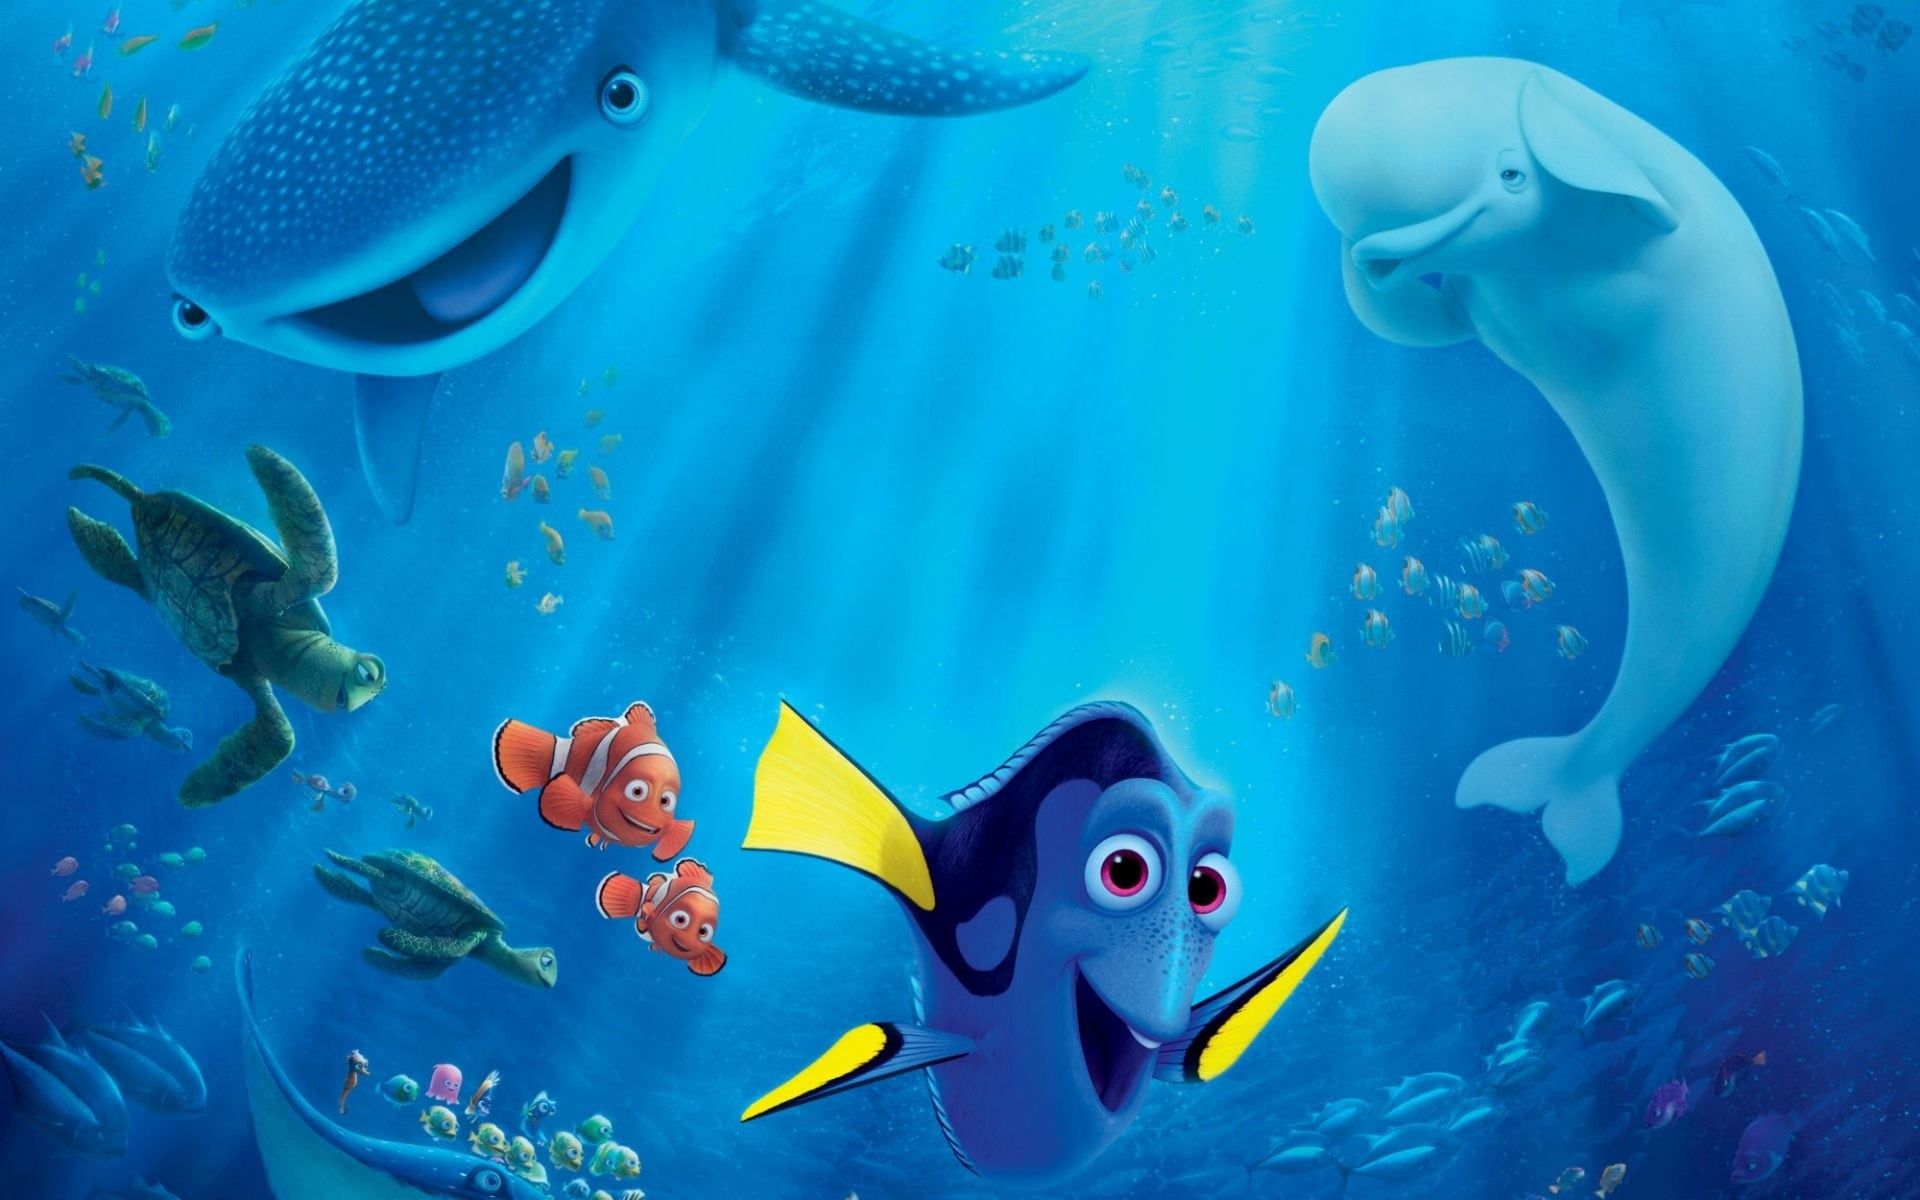 Finding Nemo wallpaper, Finding Dory, Pixar Animation Studios.